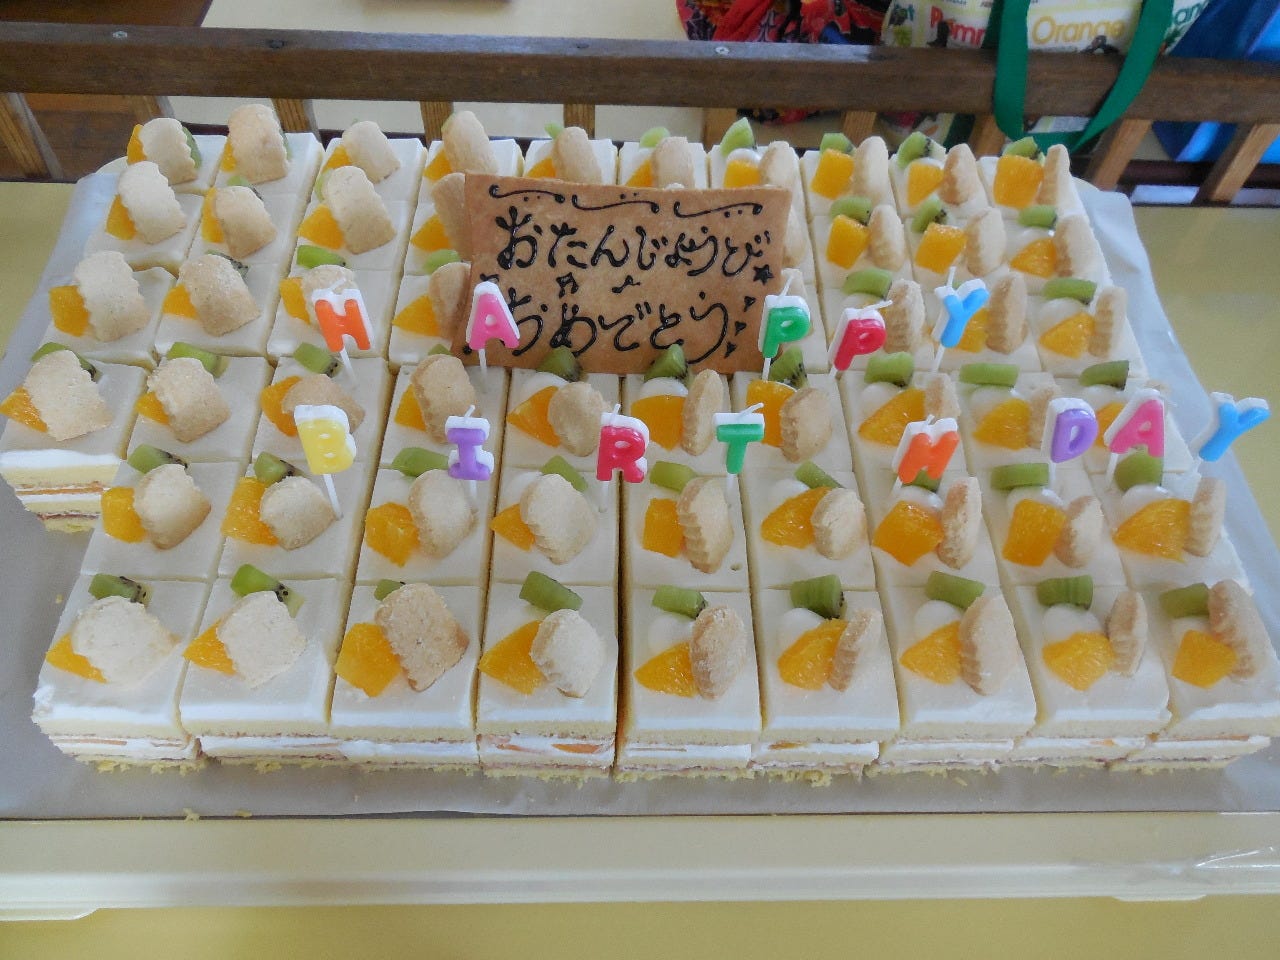 現れる 醸造所 会社 誕生 日 ケーキ 大 人数 Morinoshizuku Jp